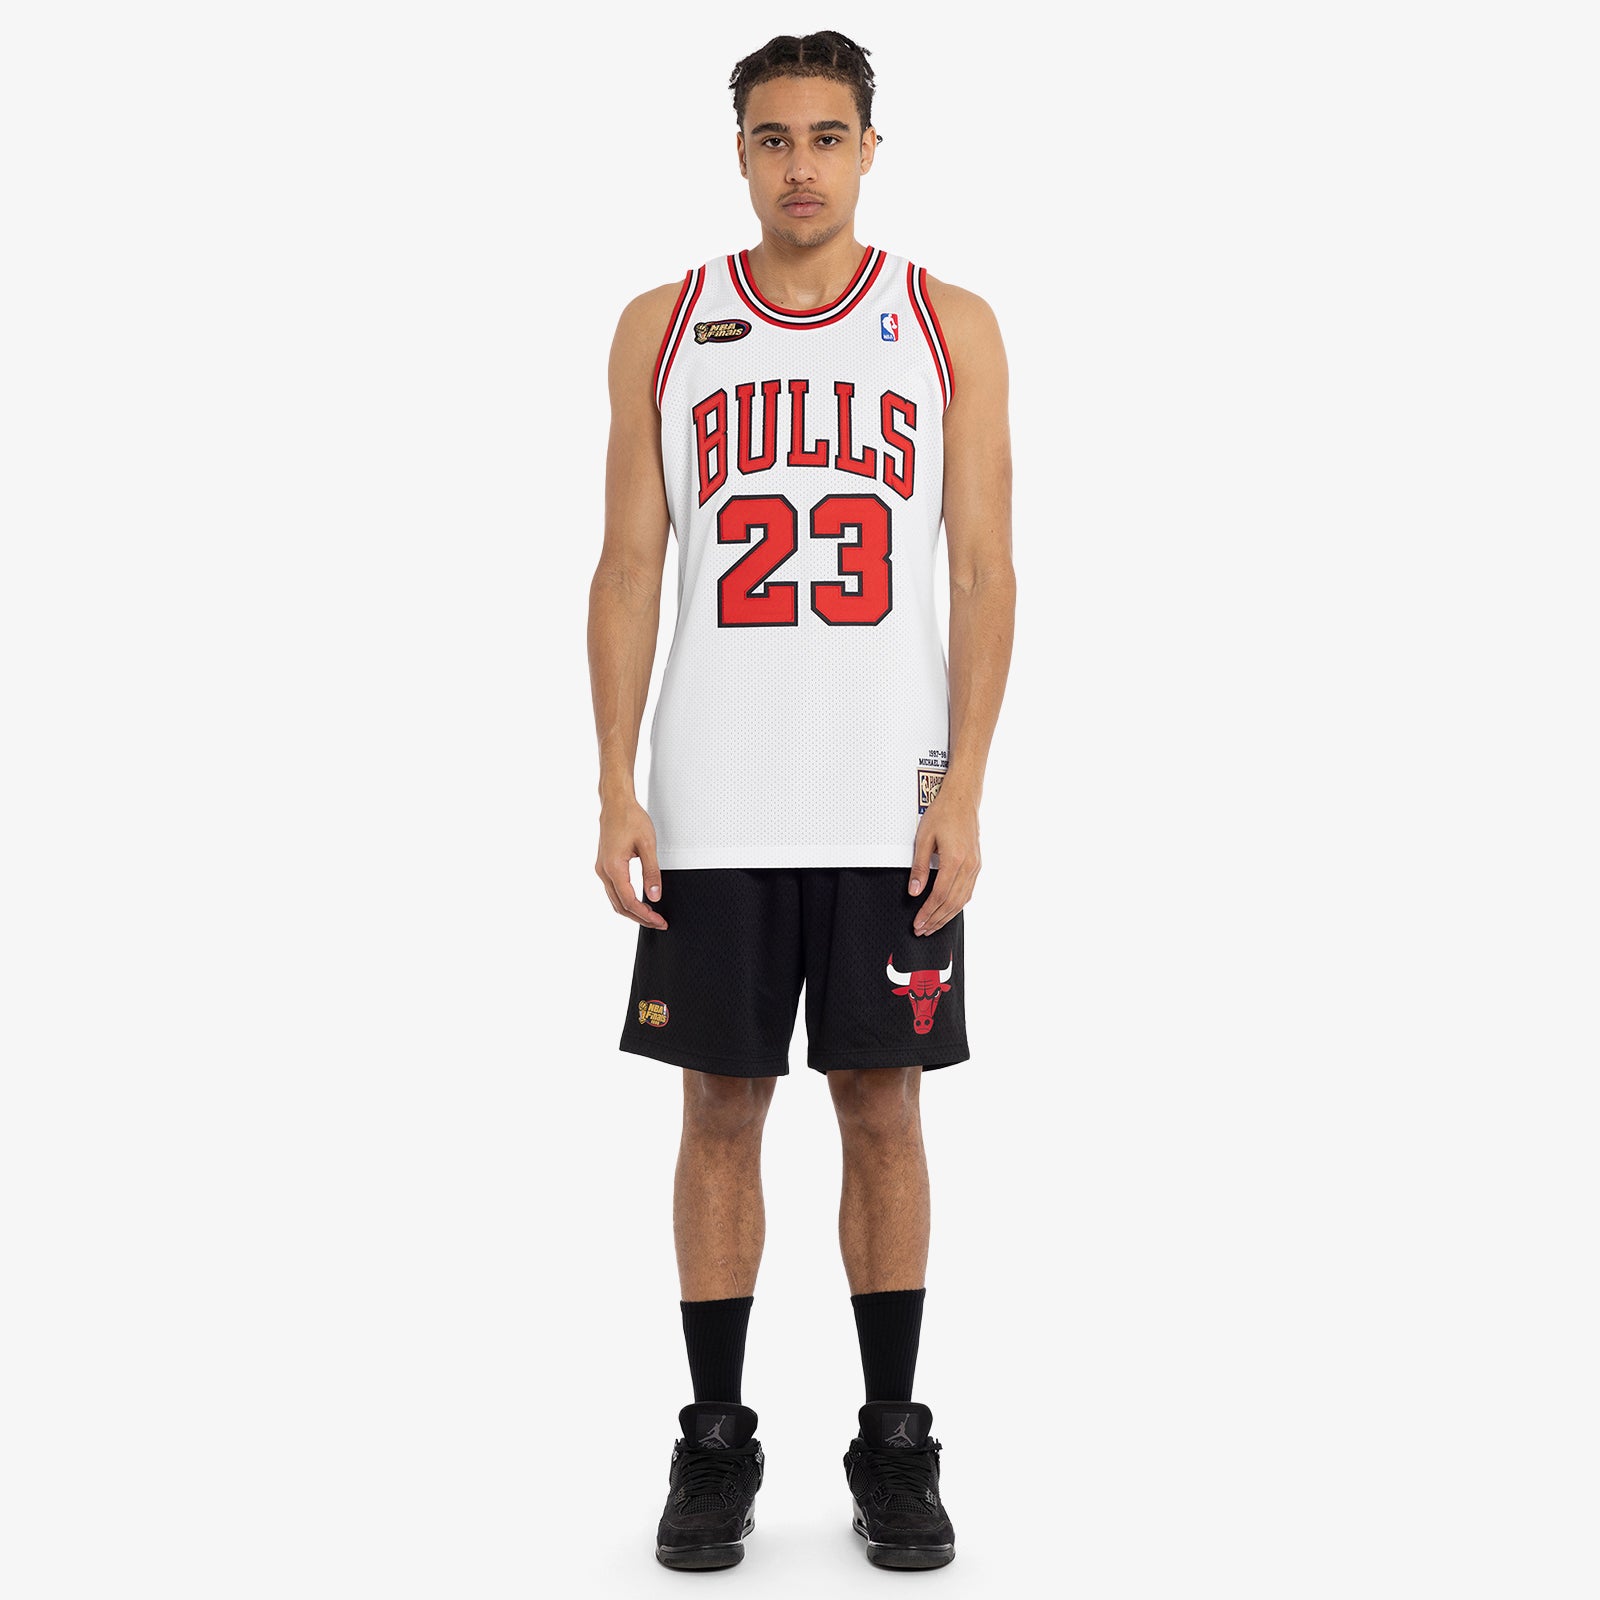 Authentic Jersey Chicago Bulls Alternate 1997-98 Michael Jordan